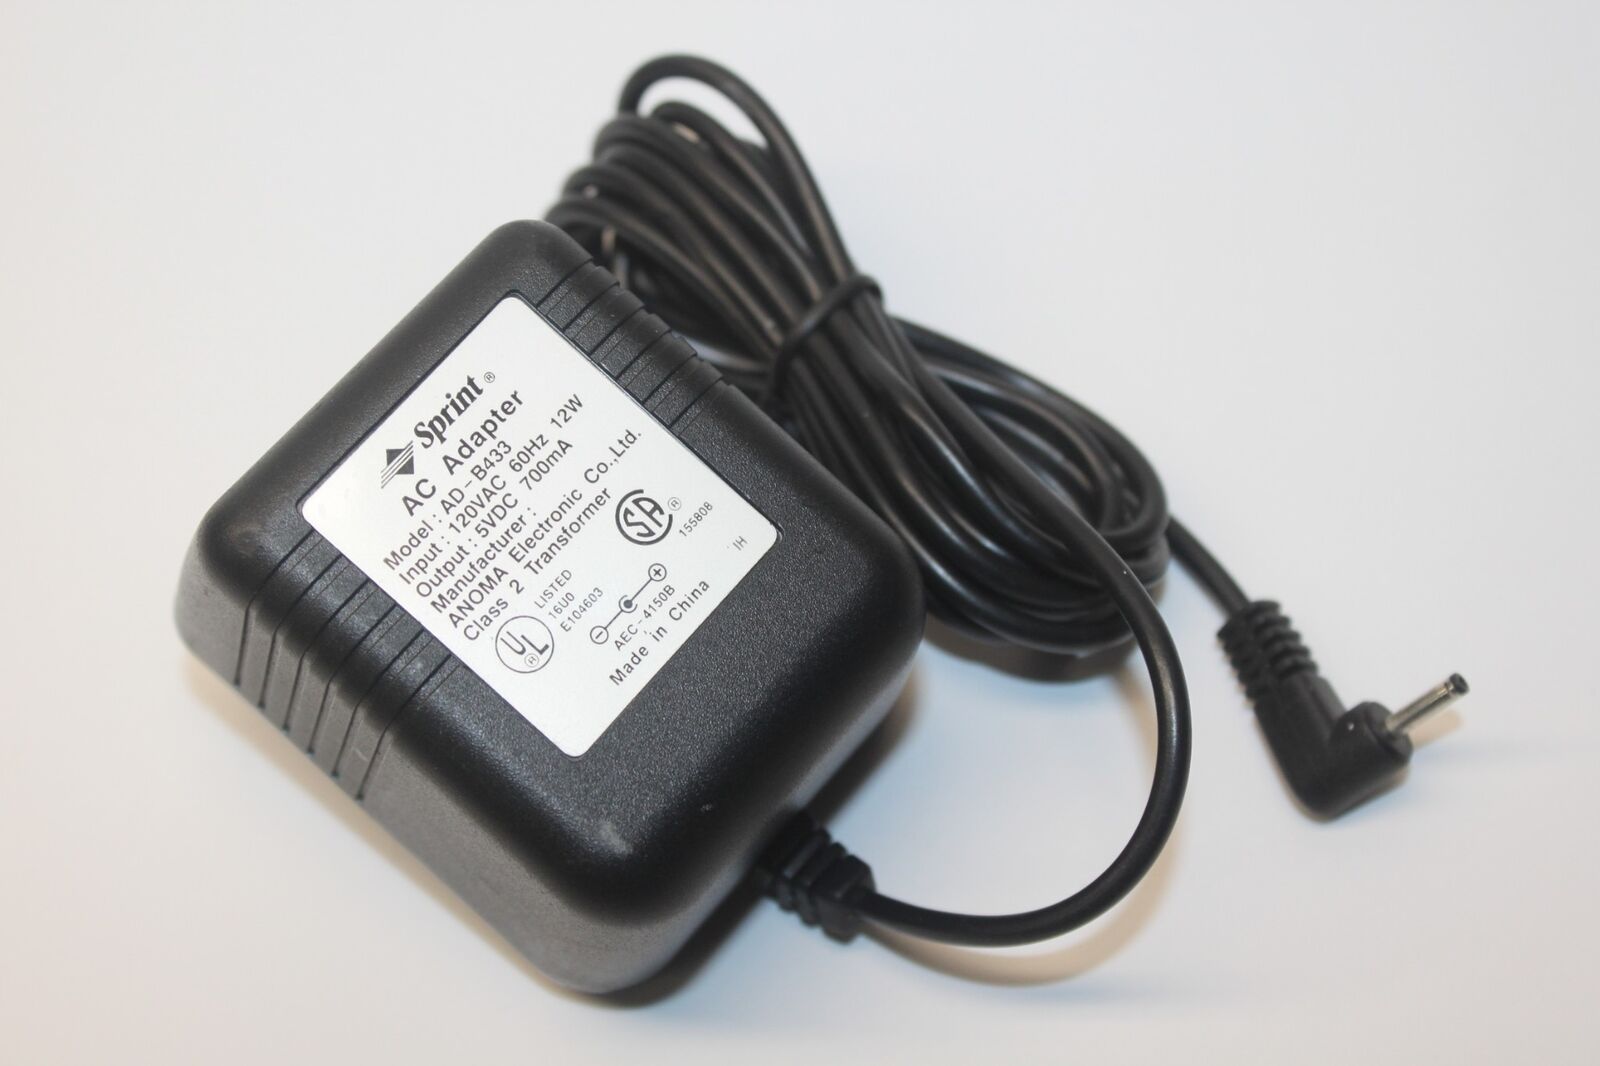 New 5V 700mA Sprint AD-B433 Power Supply Ac Adapter - Click Image to Close